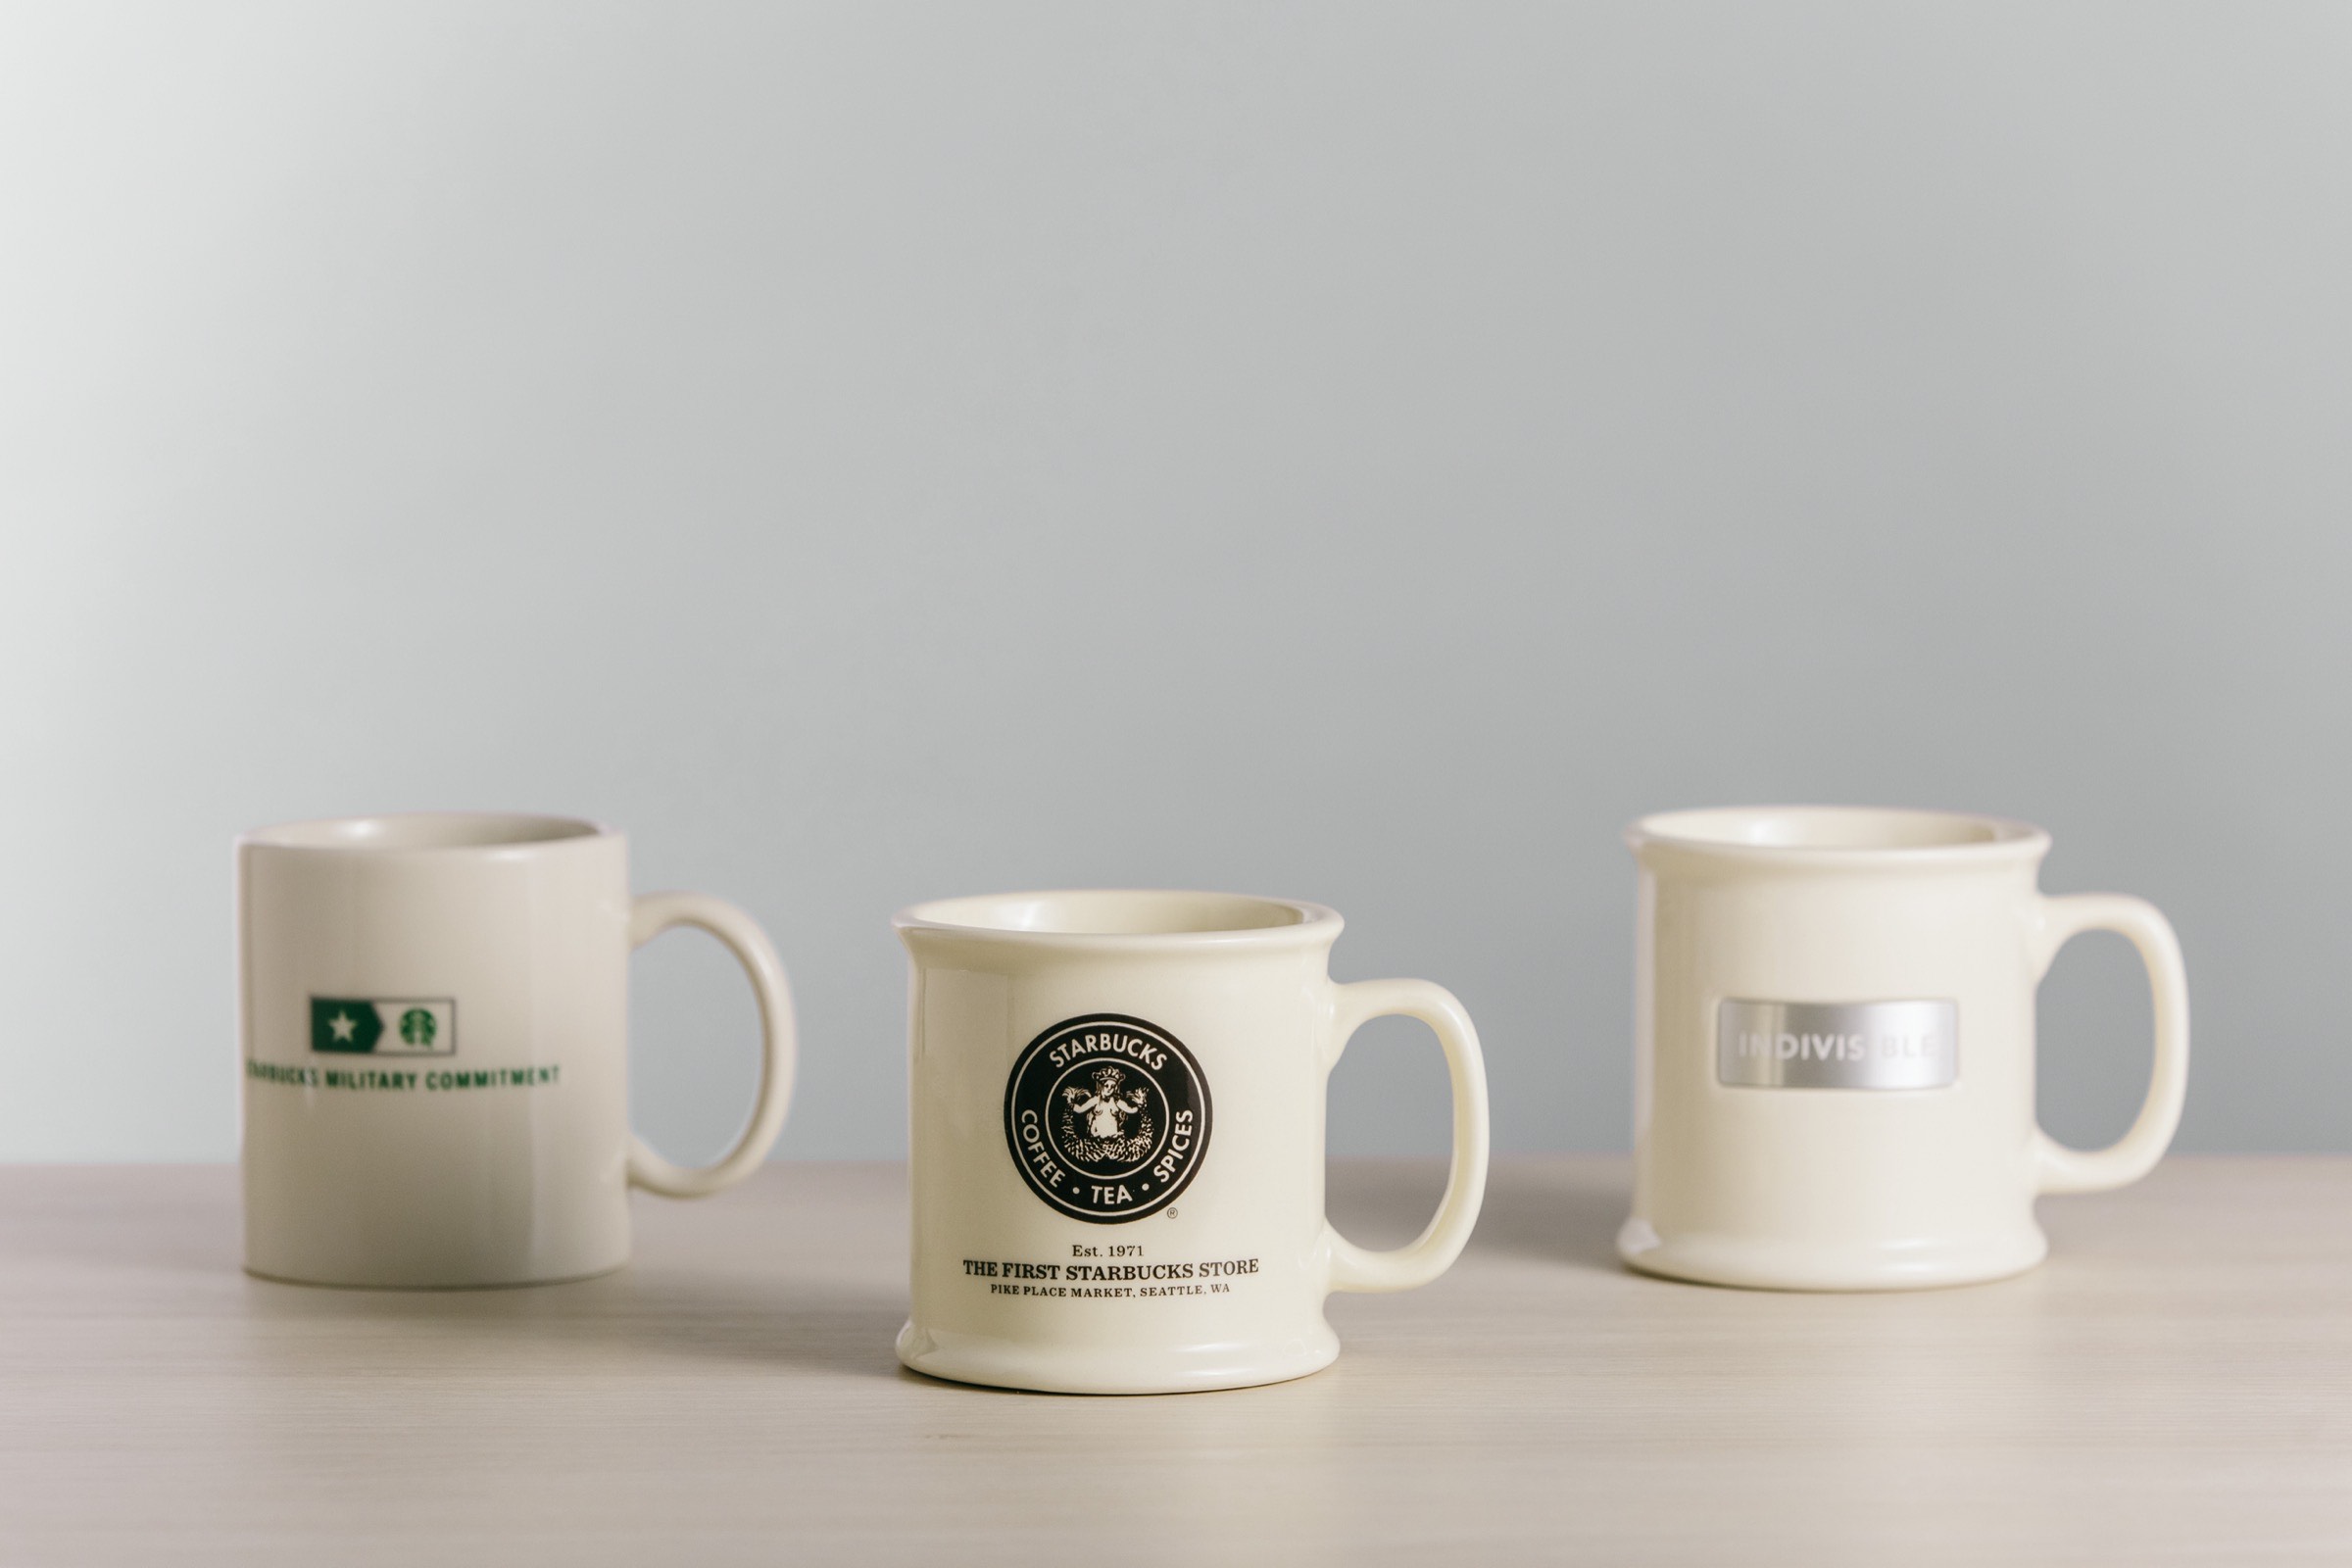 Coffee Mugs Made in the U.S.A.